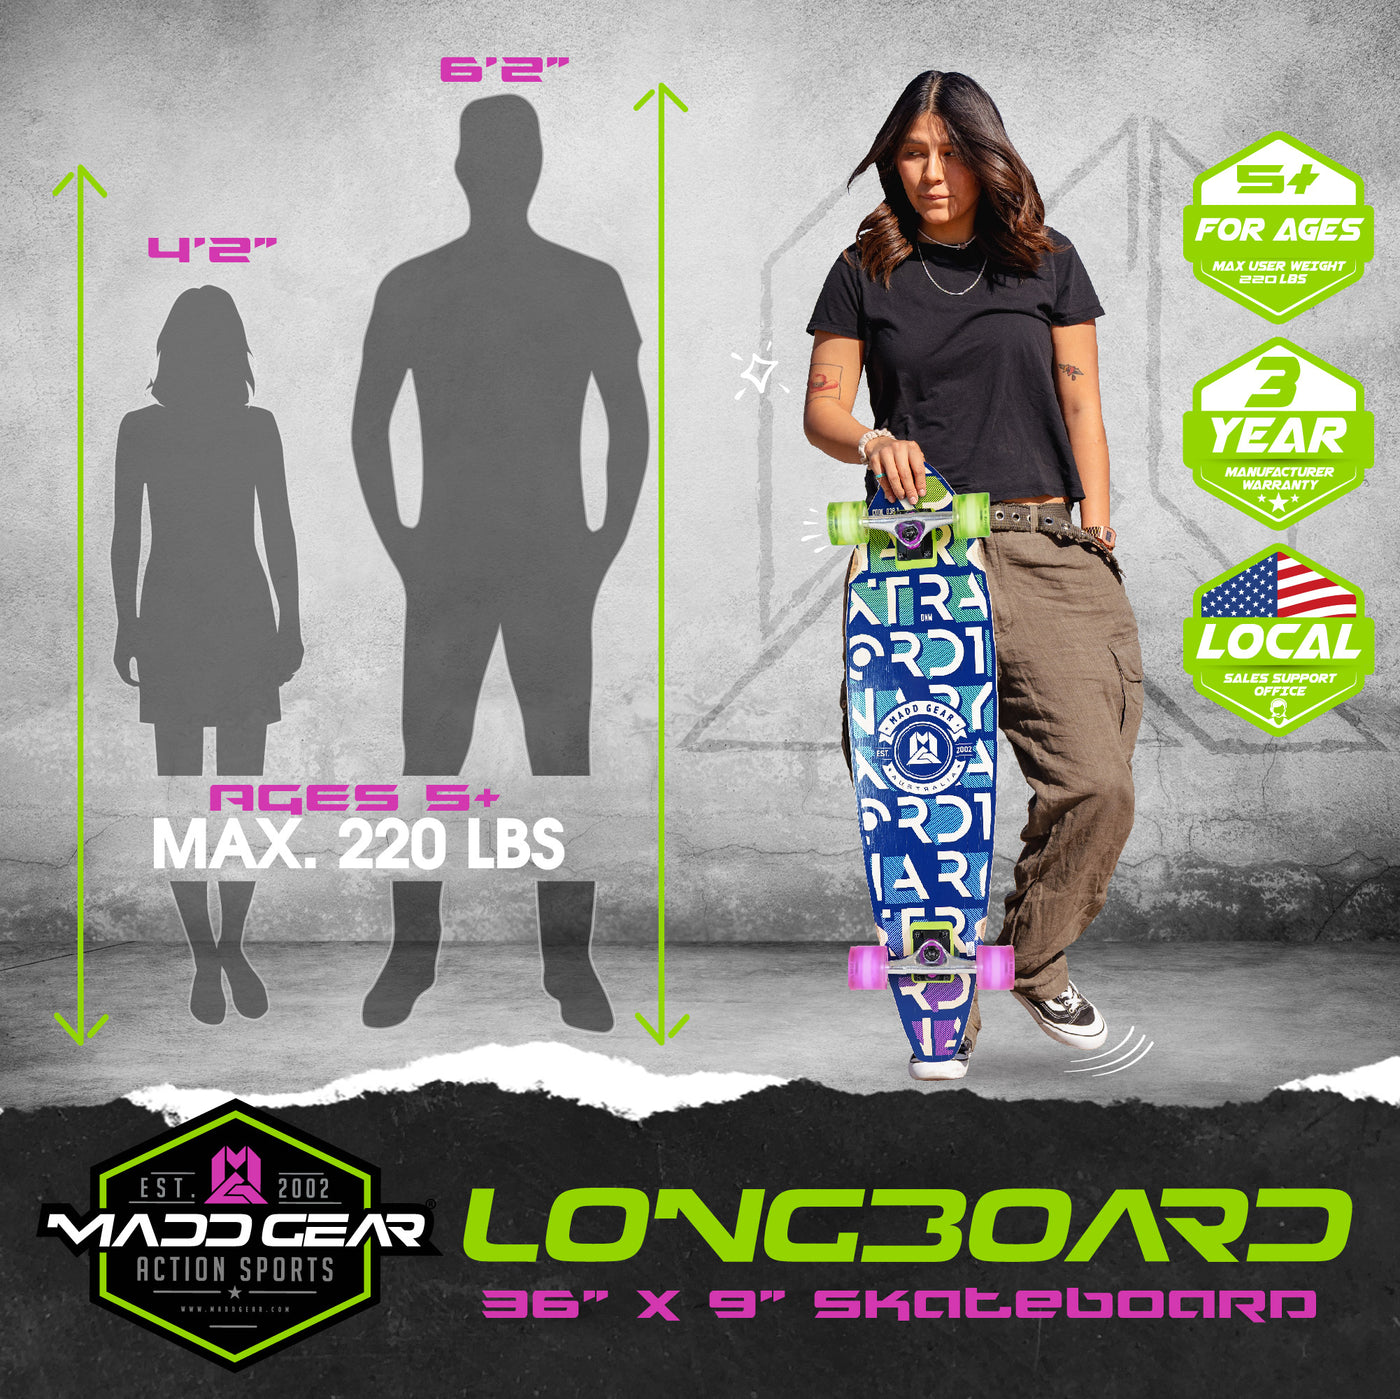 Madd Gear 36" Longboard Complete Skateboard Maple Adults High Quality Aluminum Trucks Blue Large Green Pink Wheels